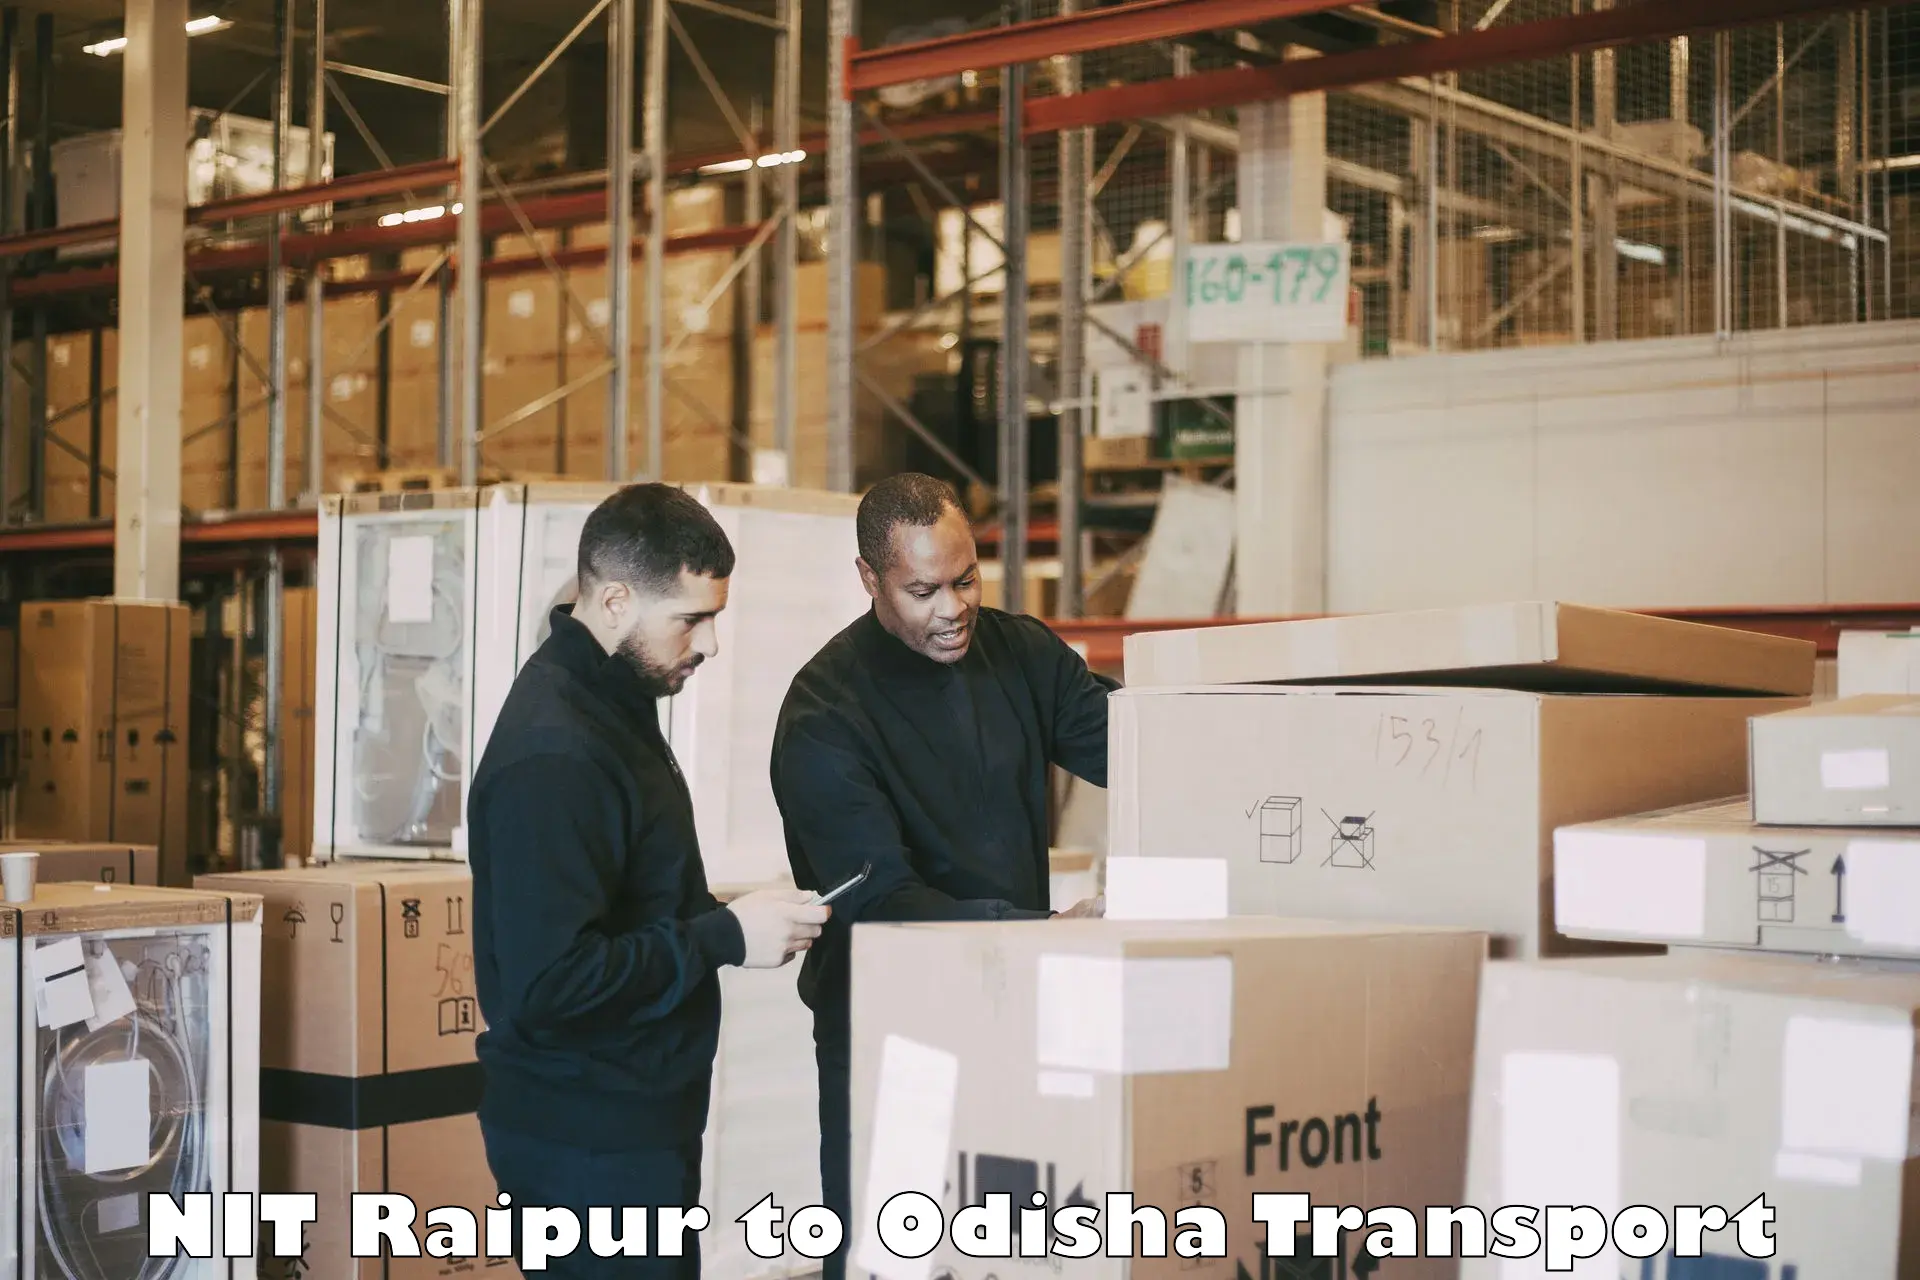 Pick up transport service NIT Raipur to Jeypore